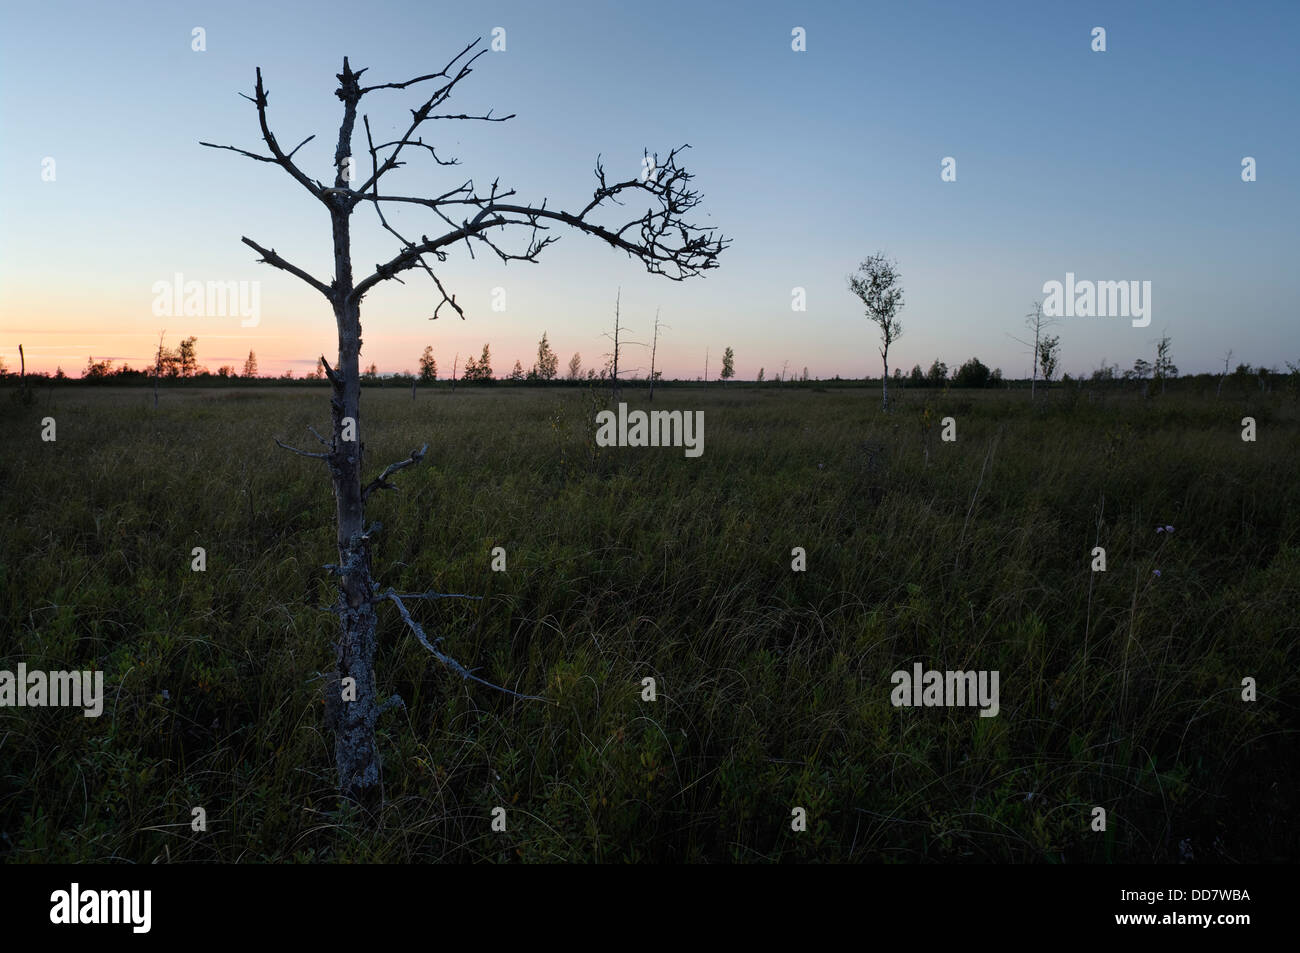 Tuhu bog under night sky sapless tree in the foreground, Western Estonia Baltic States Europe EU Stock Photo